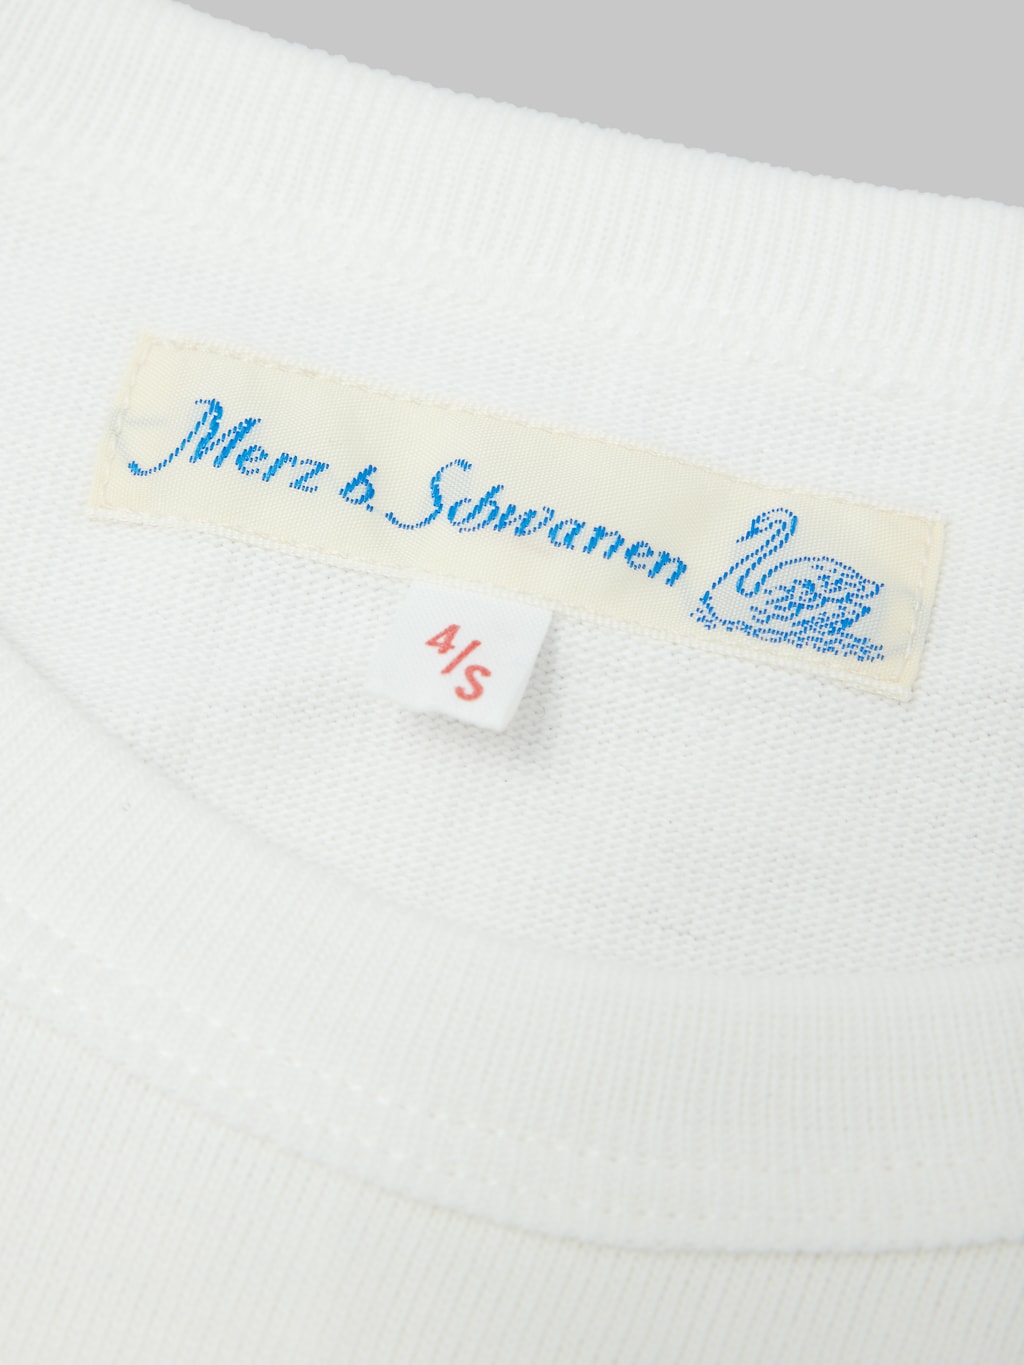 merz b schwanen 2S14 loopwheeled Tshirt  white  brand size tag